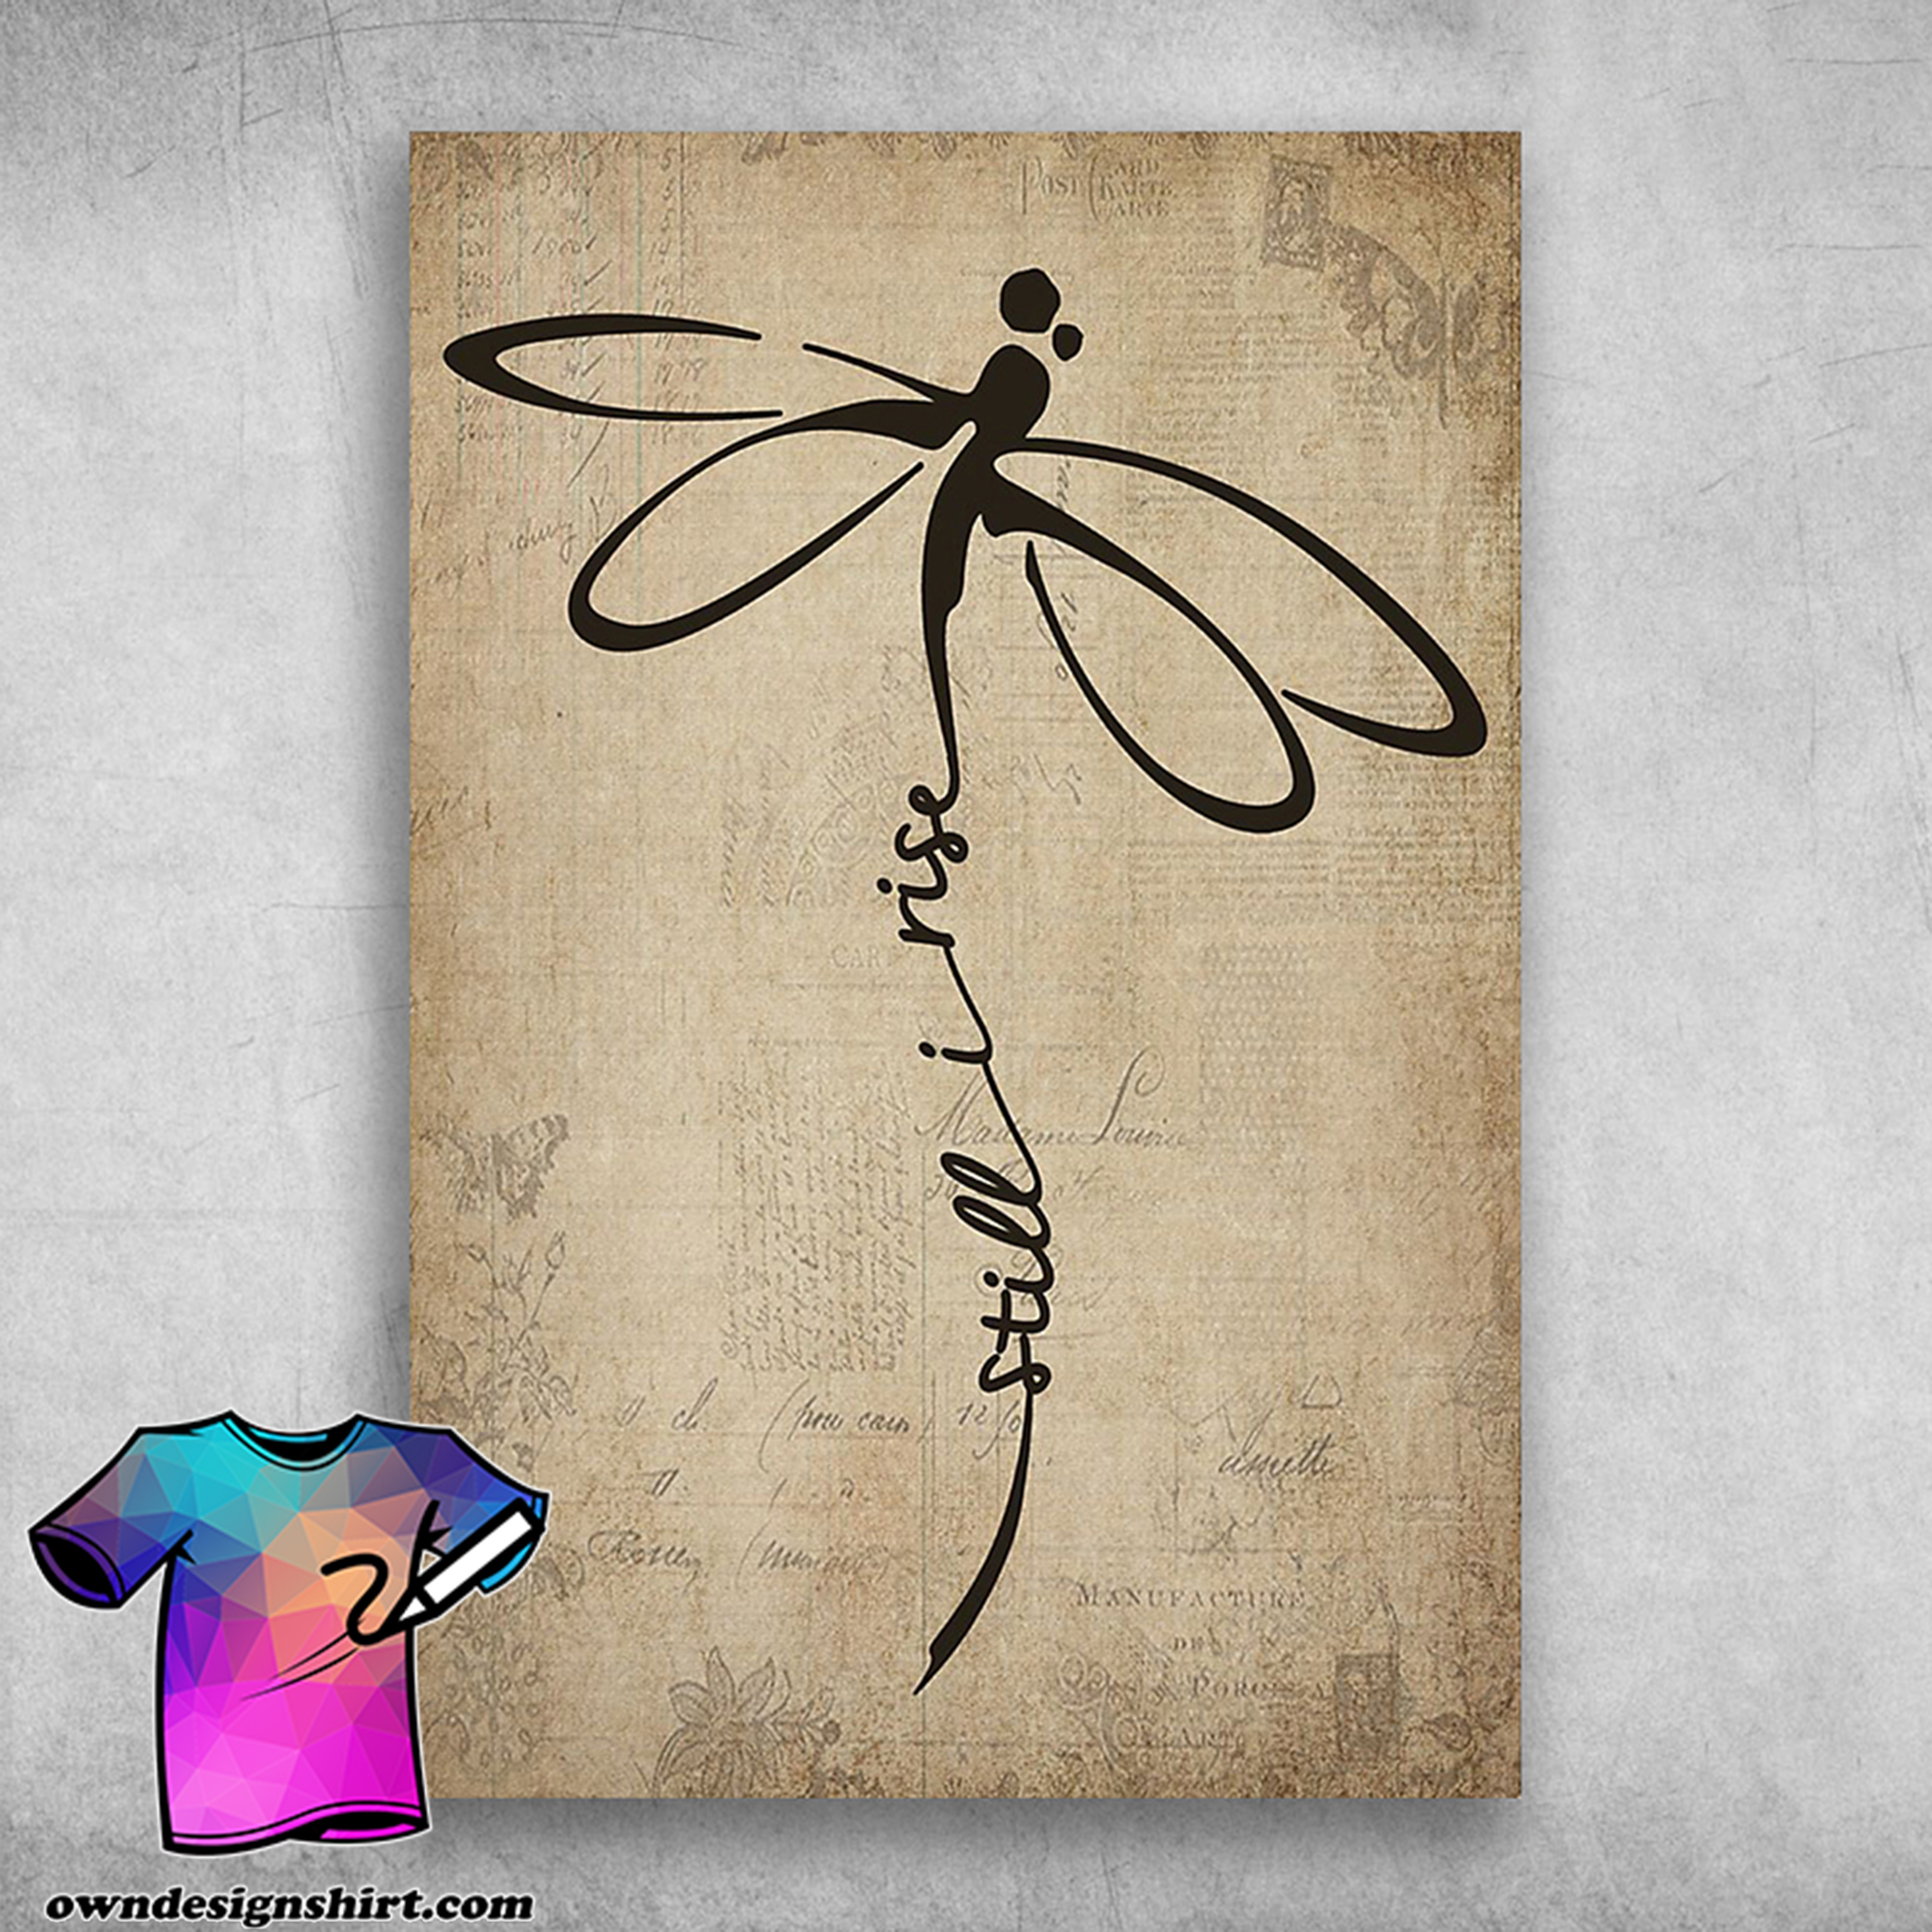 Dragonfly still i rise dragonfly spirit little lamb dragonfly poster